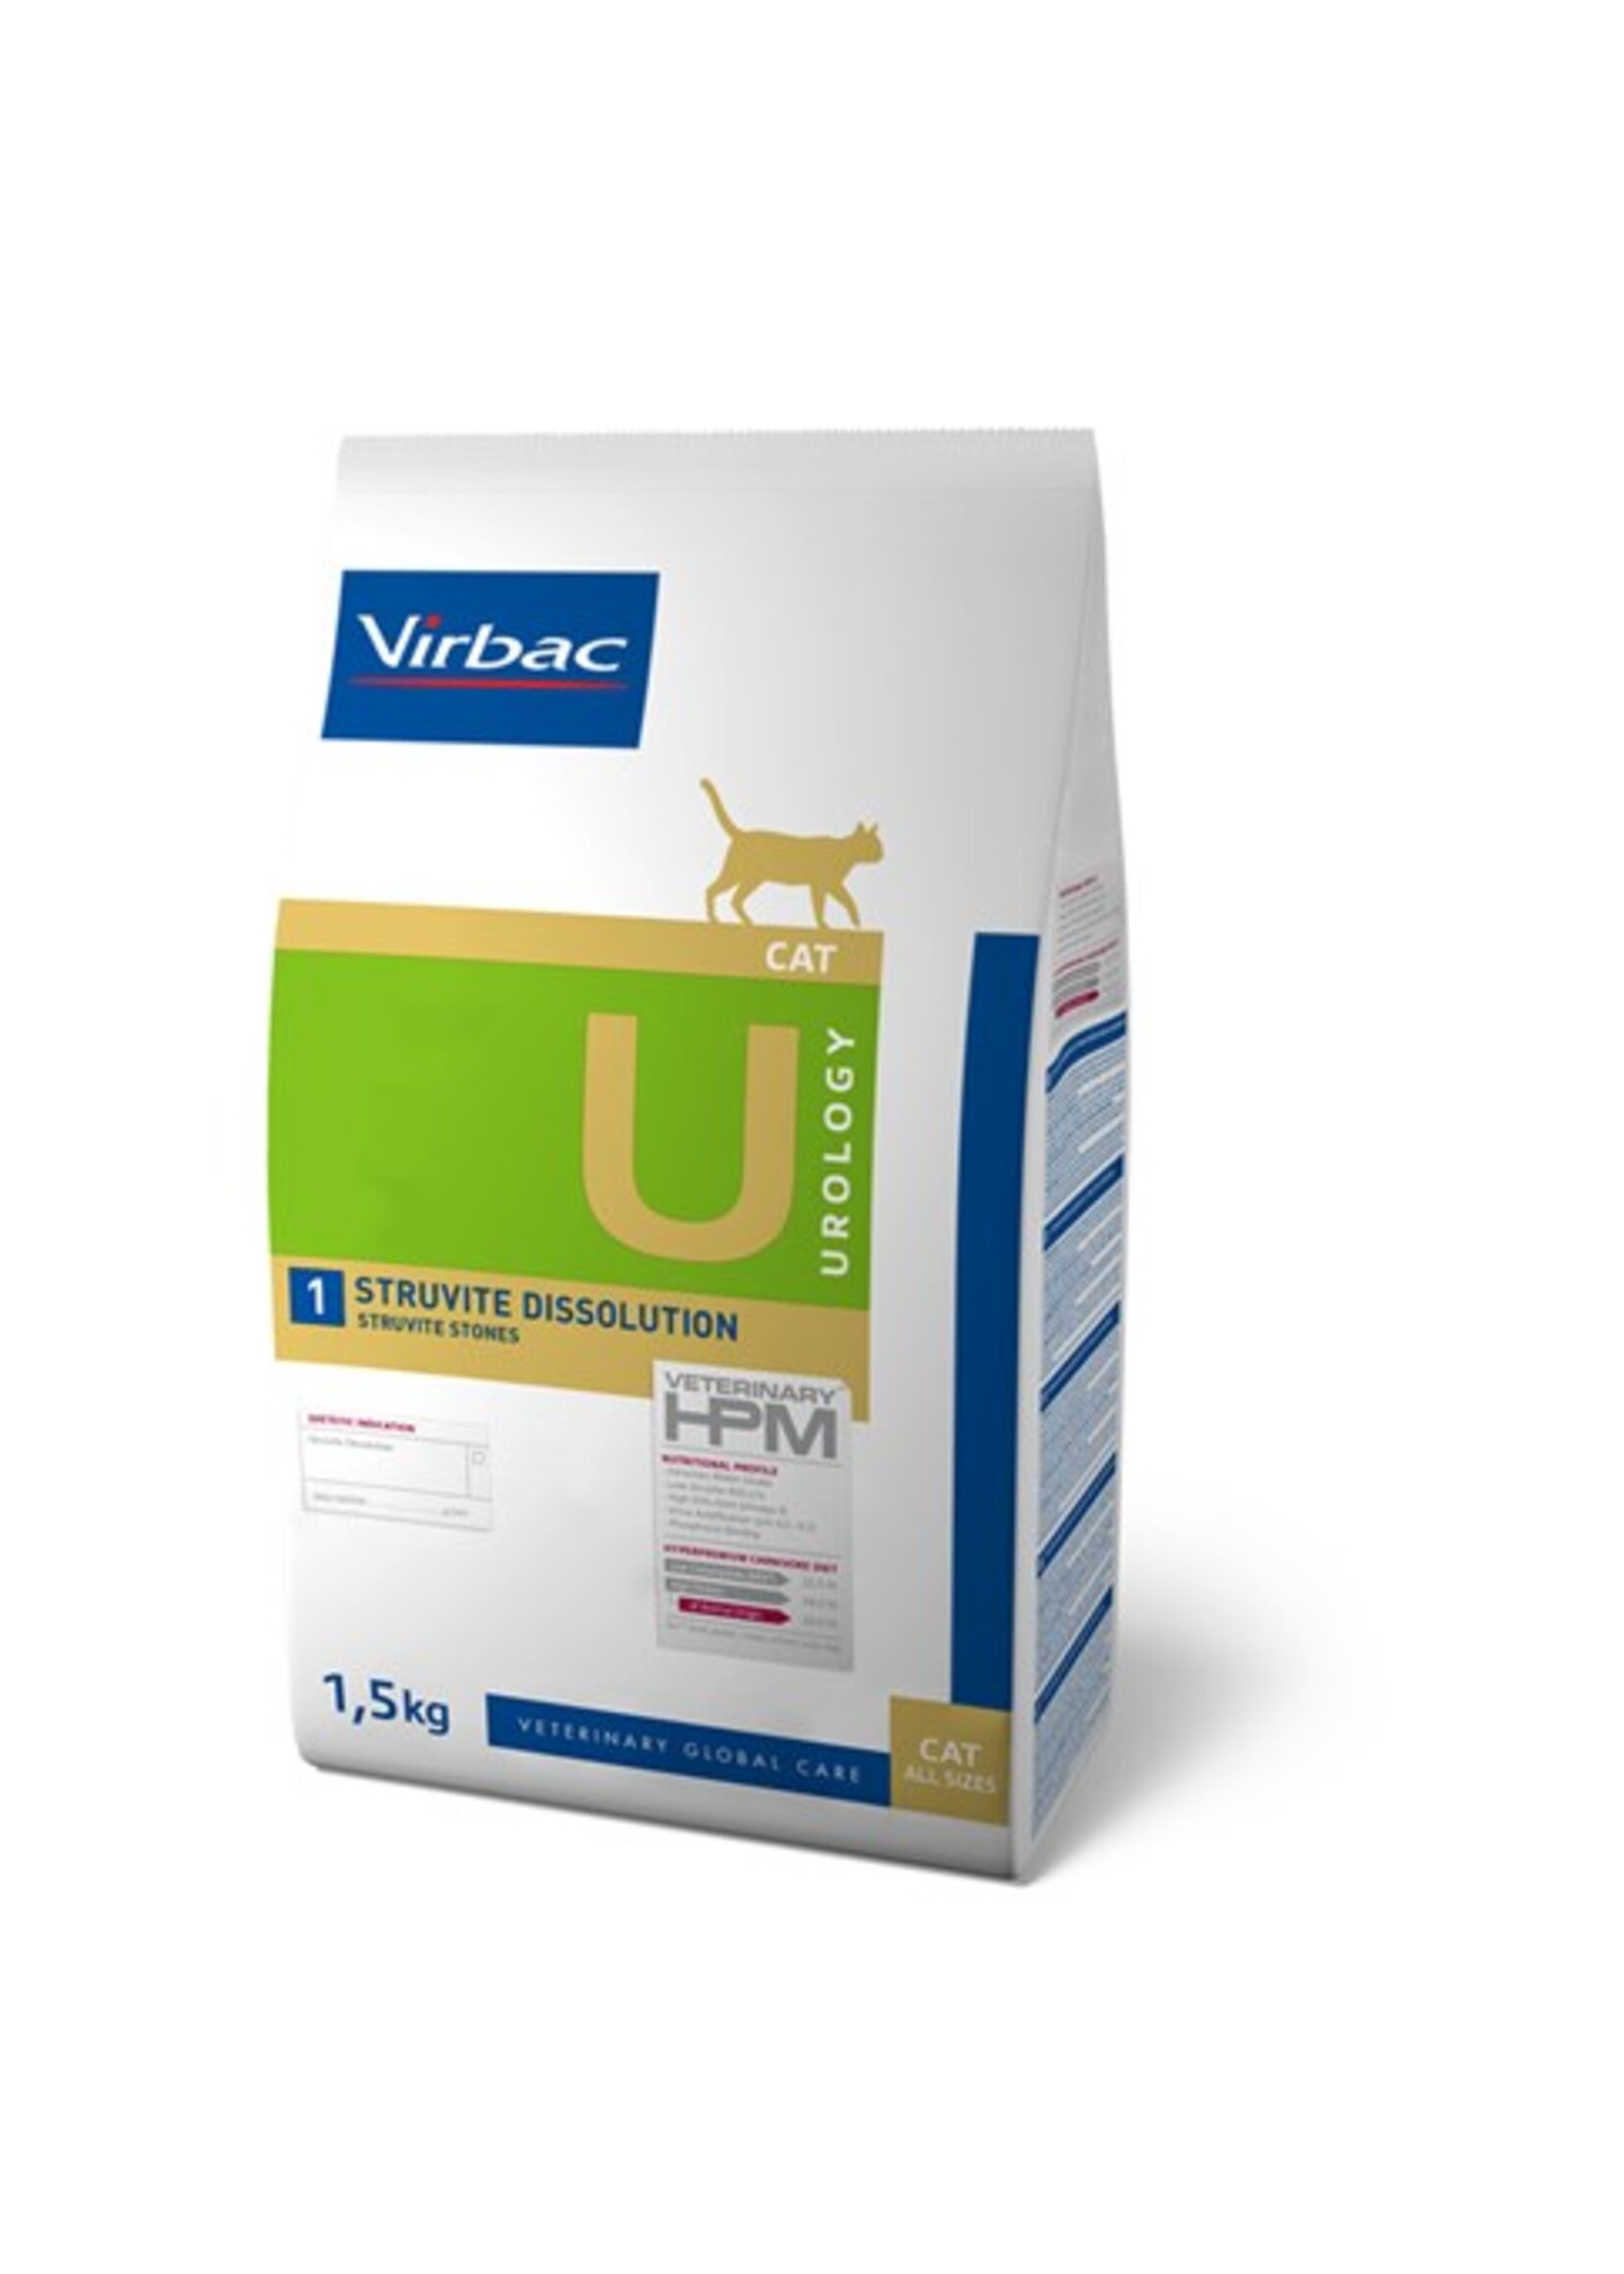 Virbac Virbac Hpm Cat Urology Struvite Dissolution U1 3kg